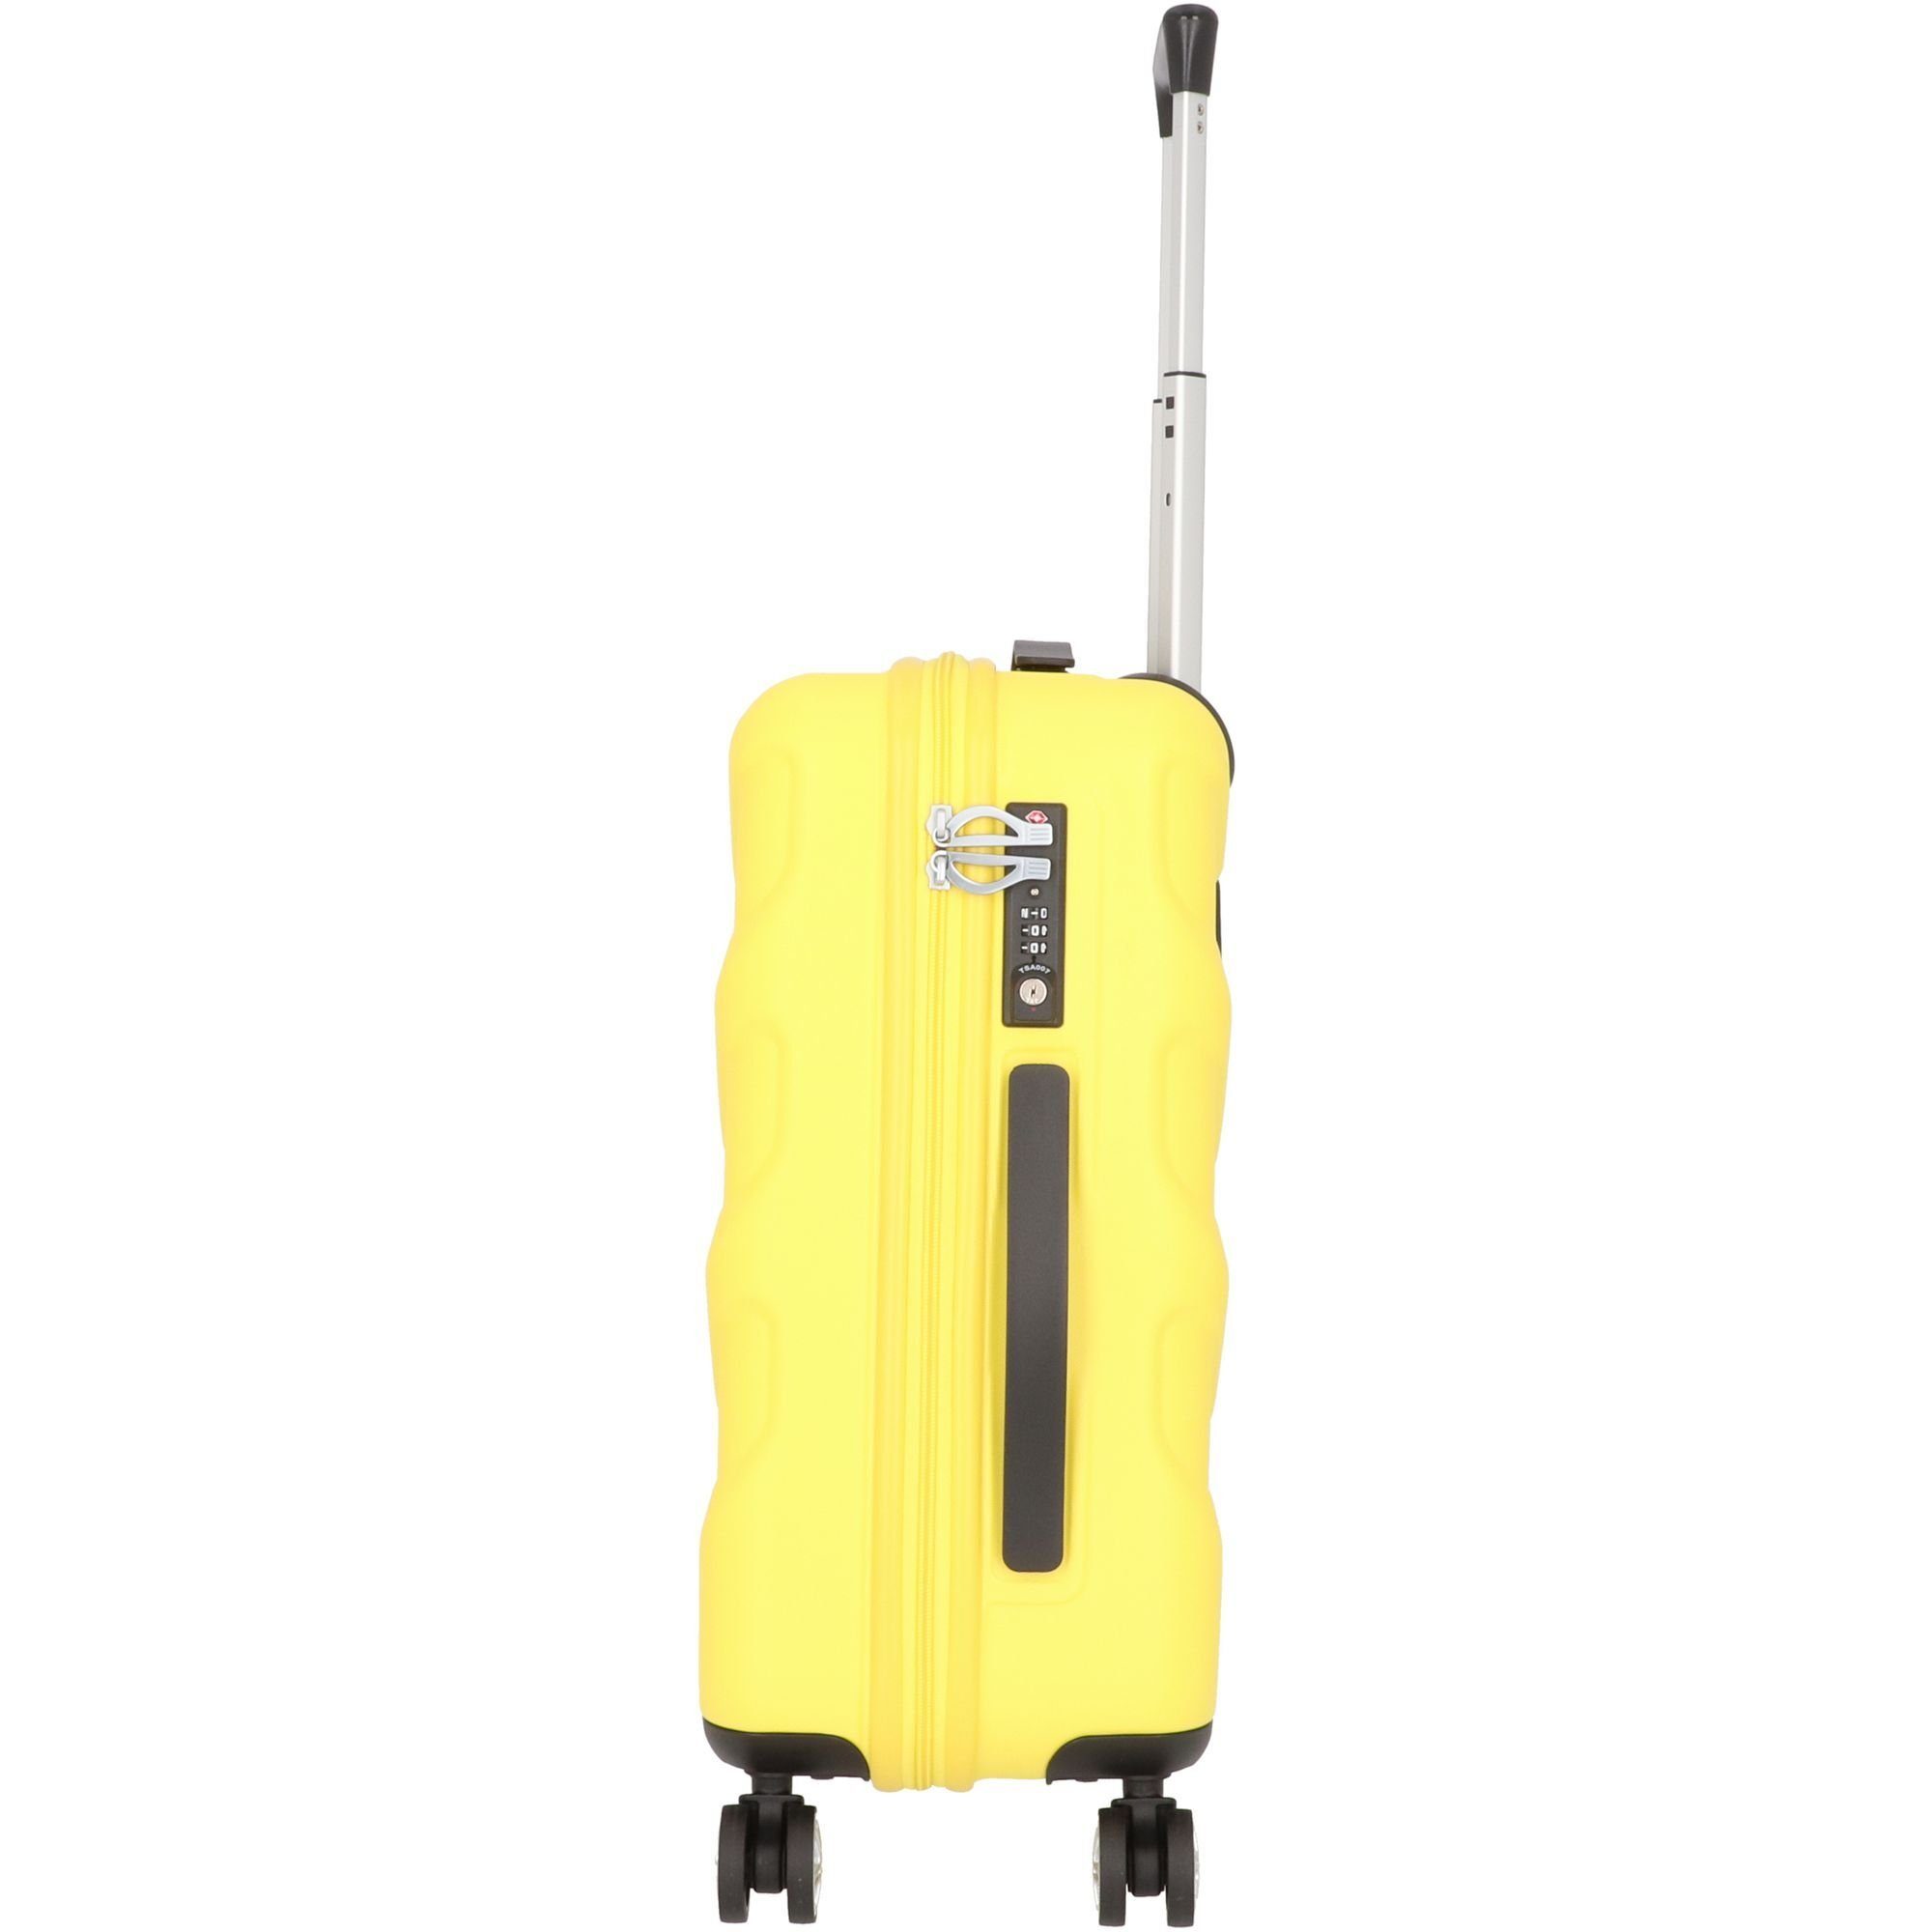 Stratic Handgepäck-Trolley 2, yellow 4 Arrow Rollen, ABS